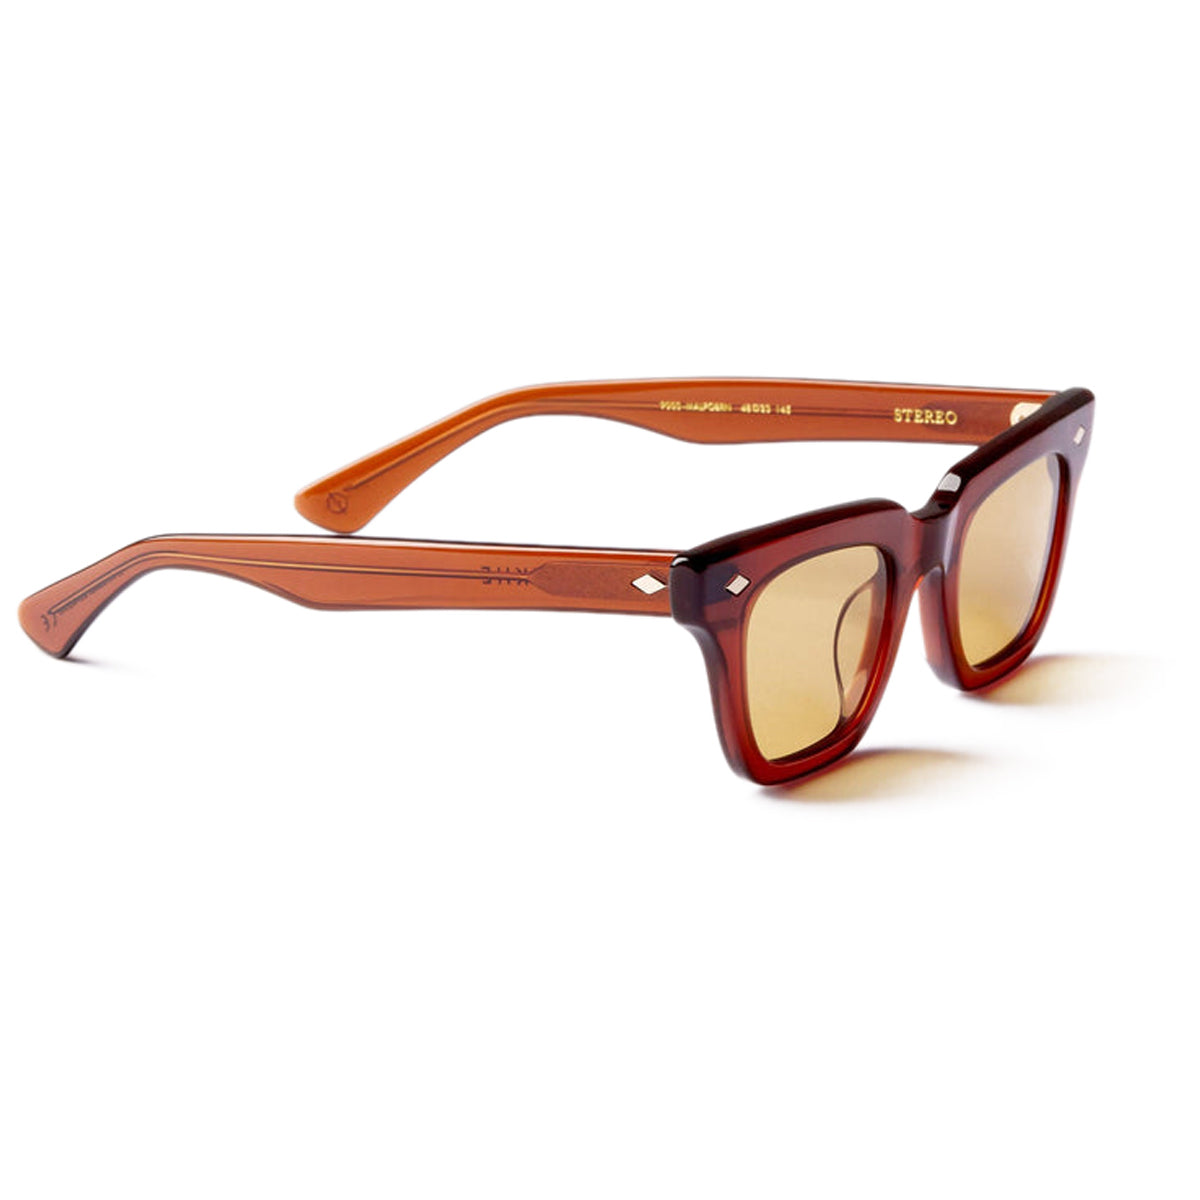 Epokhe Stereo Sunglasses - Maple Polished/Brown image 1